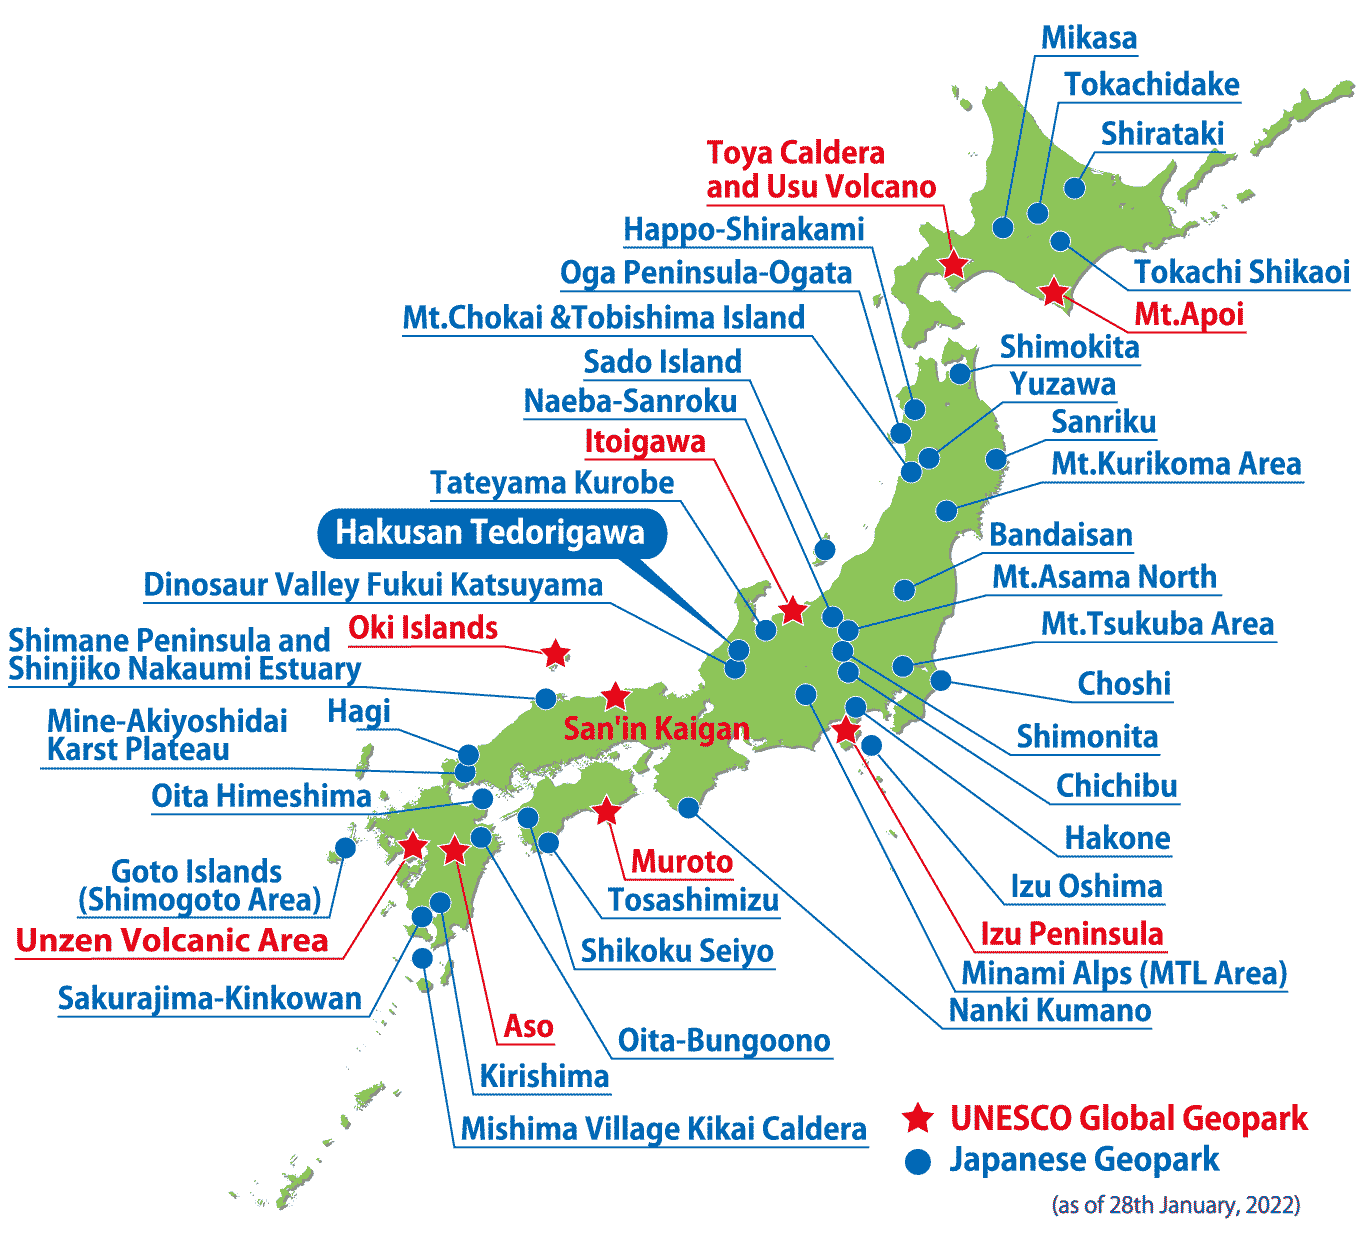 Japanese Geopark Network